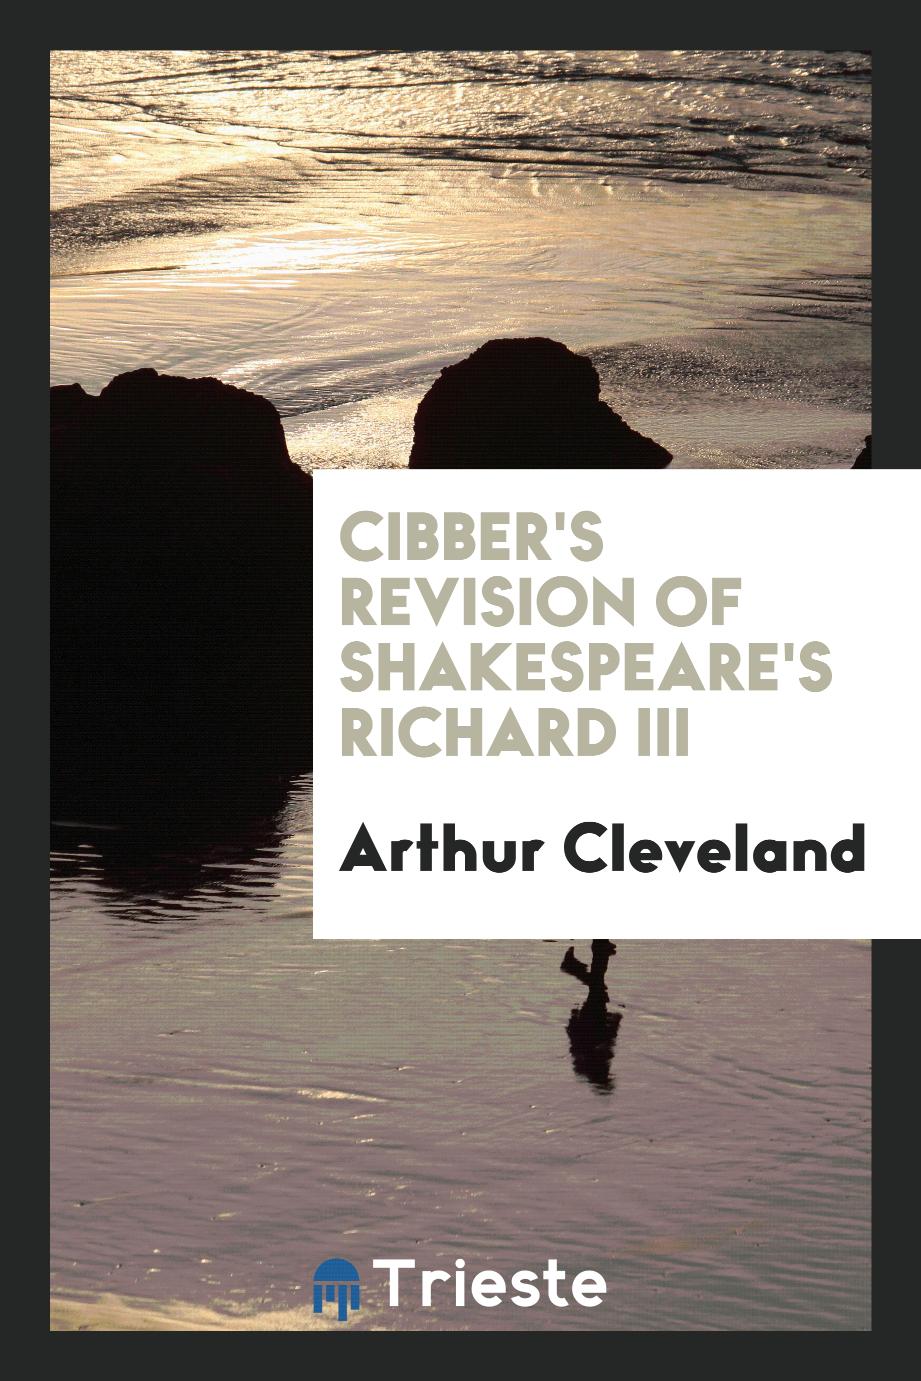 Cibber's revision of Shakespeare's Richard III